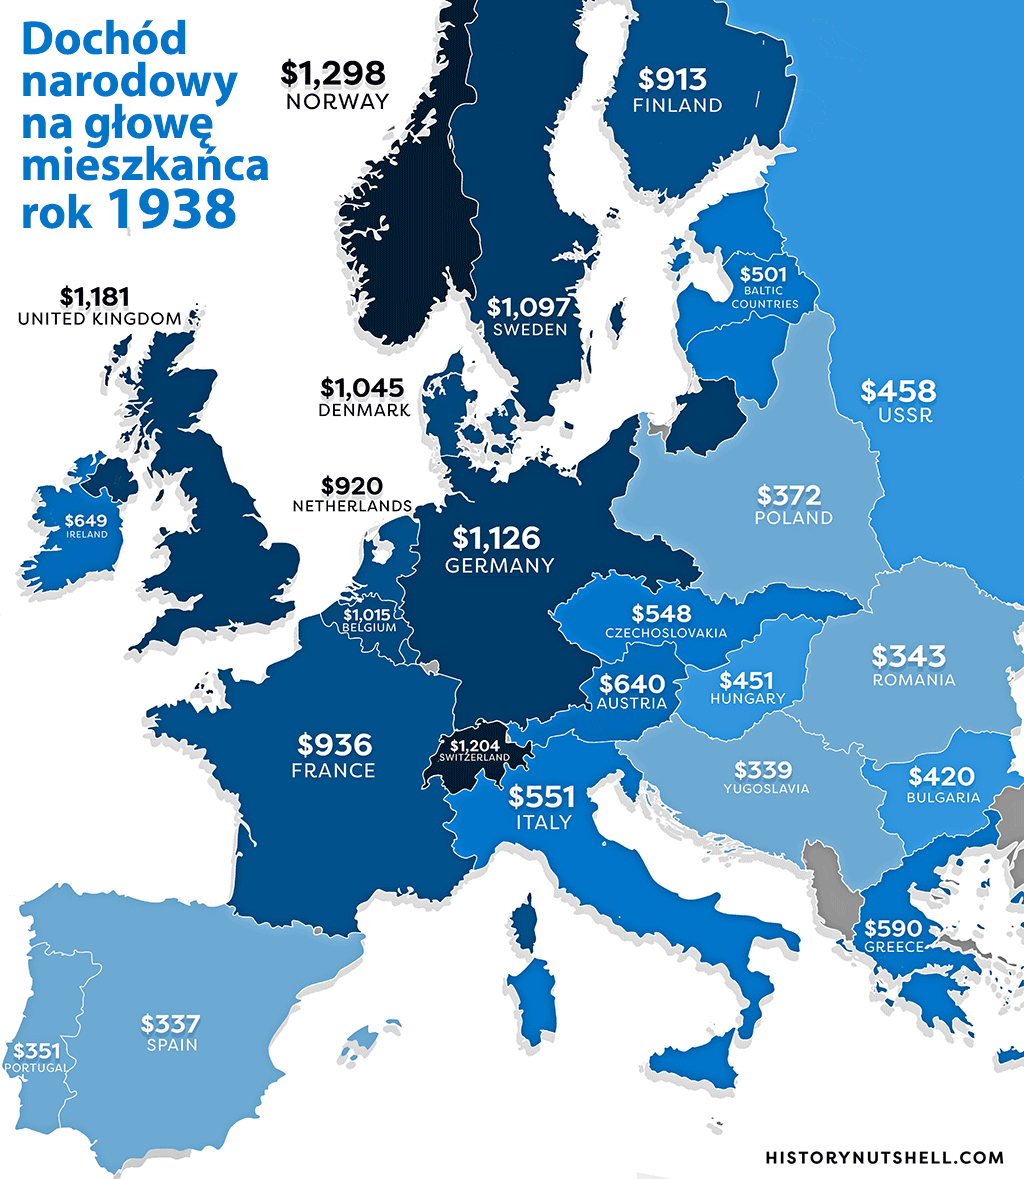 Dochód narodowy 1938 r.